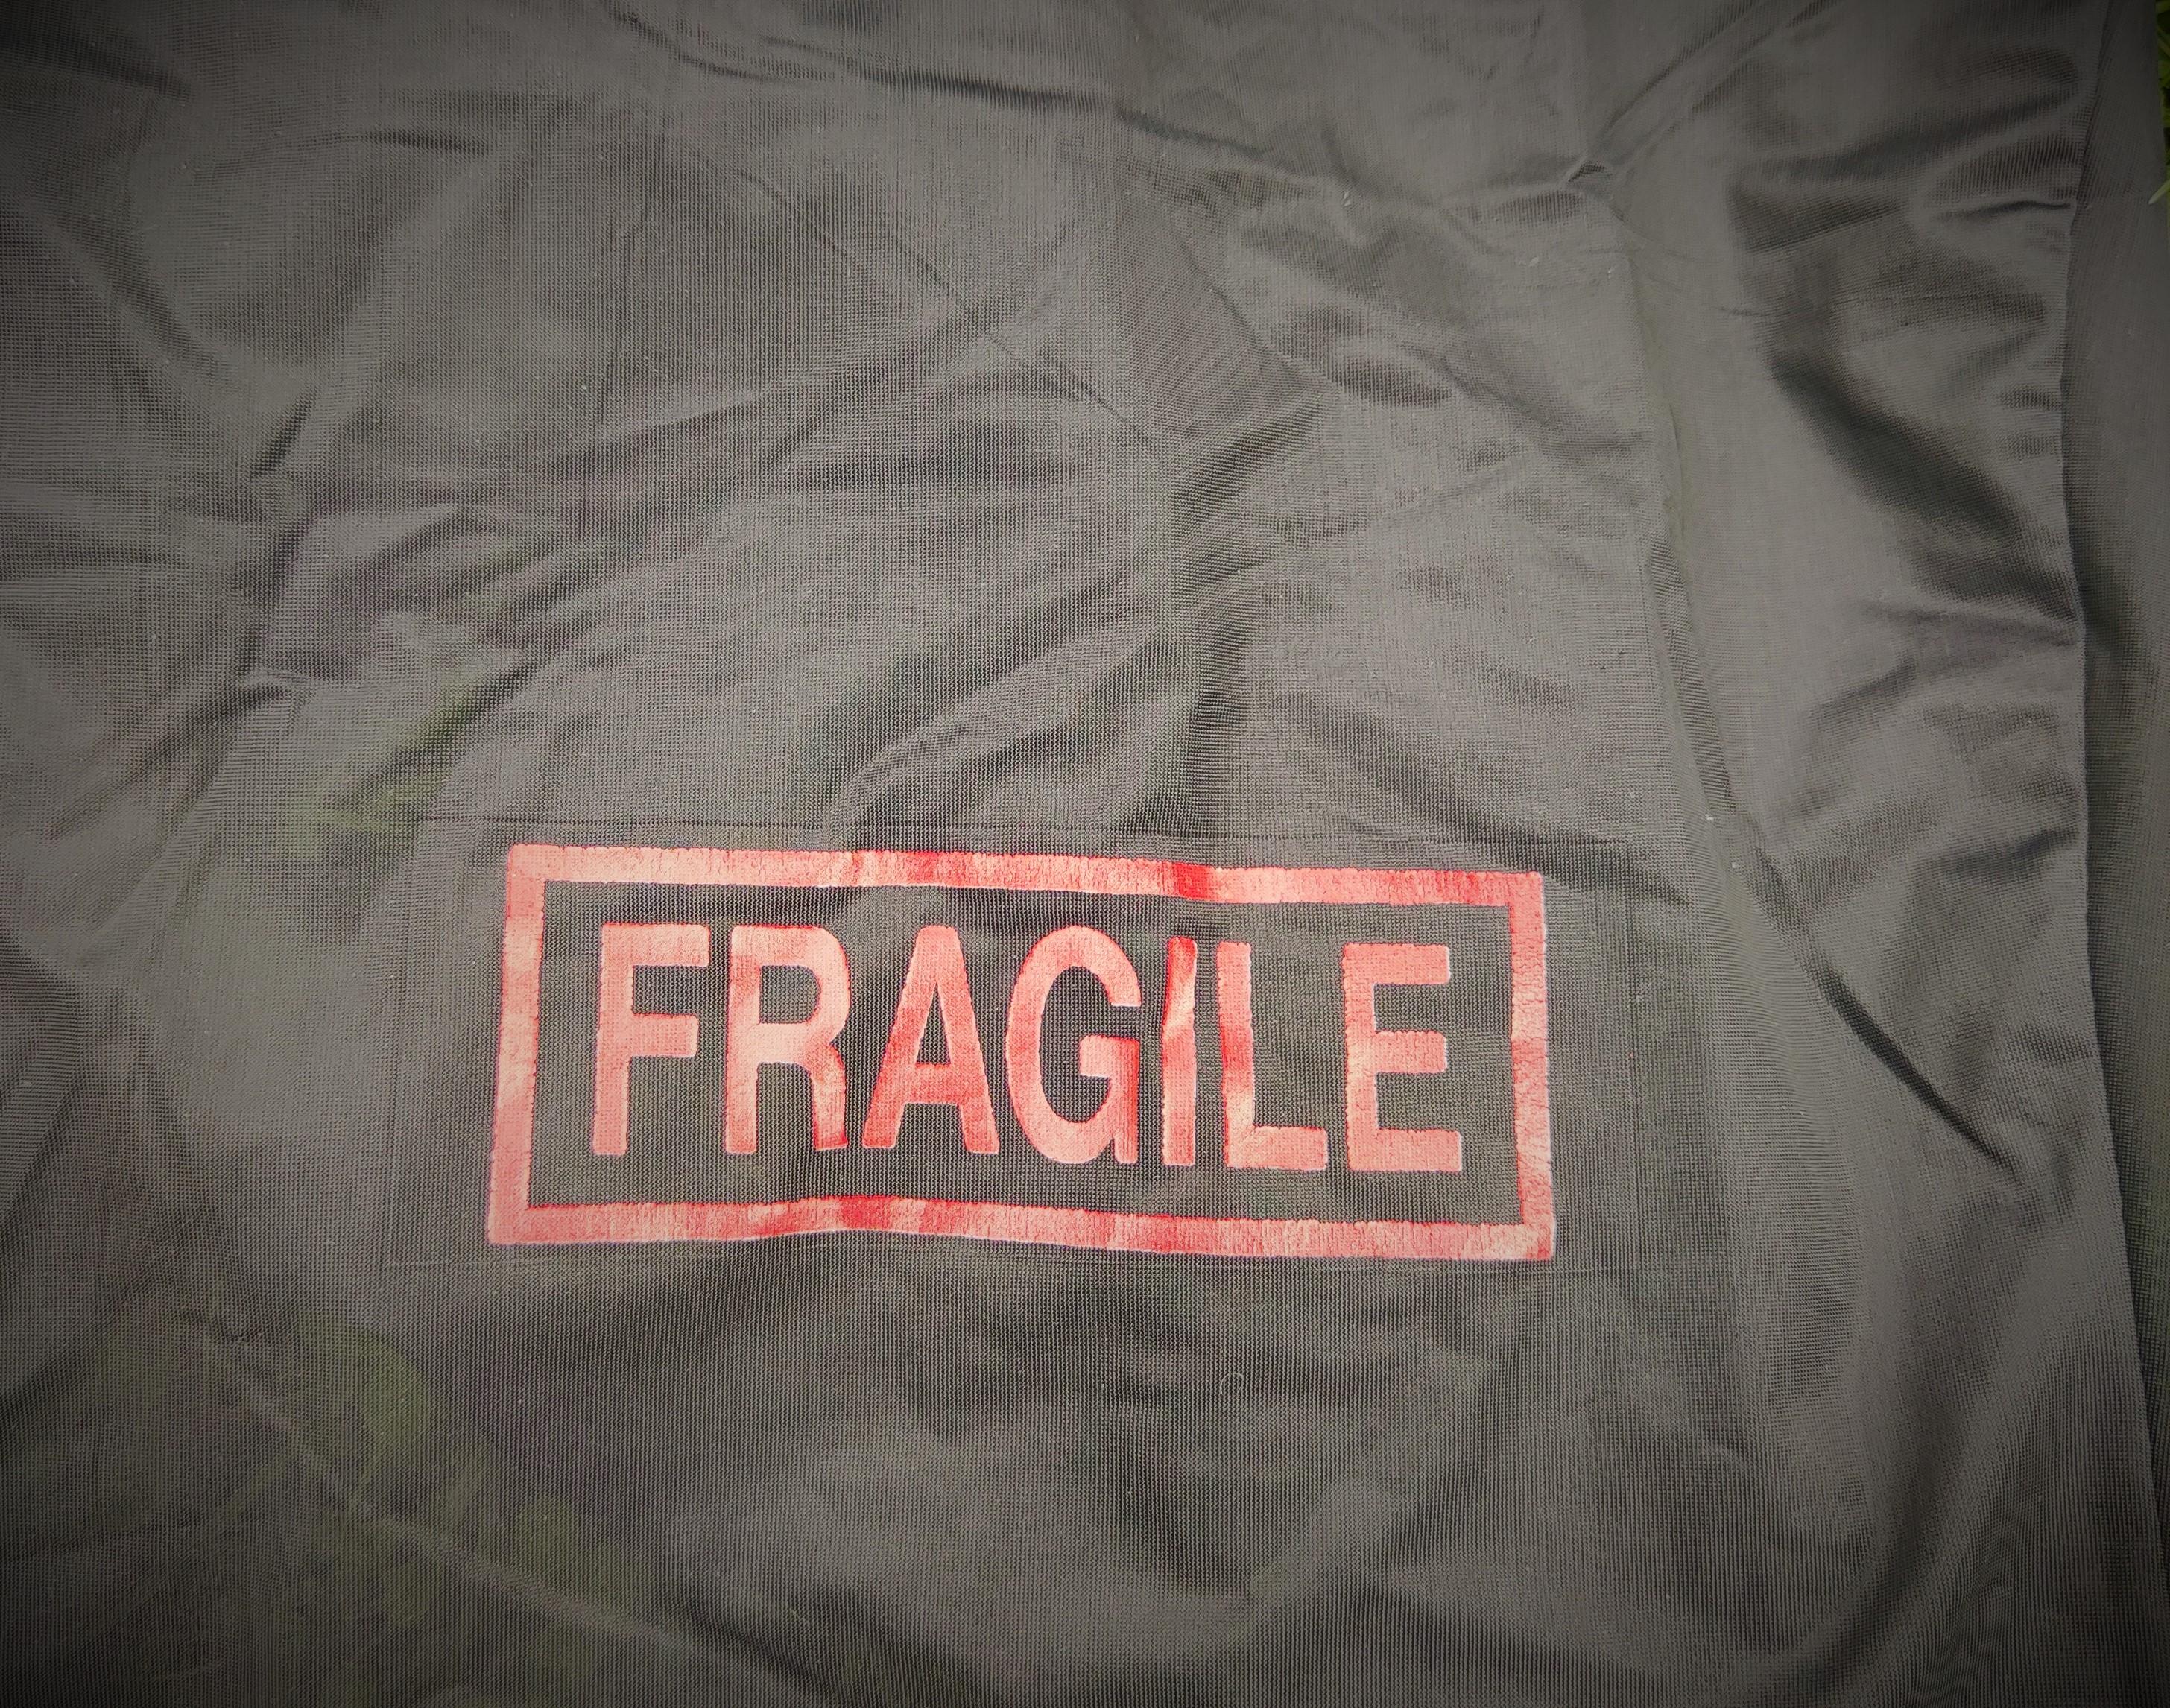 Jean Paul Gaultier Fragile Perfume Transparent Vintage 90s T-shirt Tee Top 1